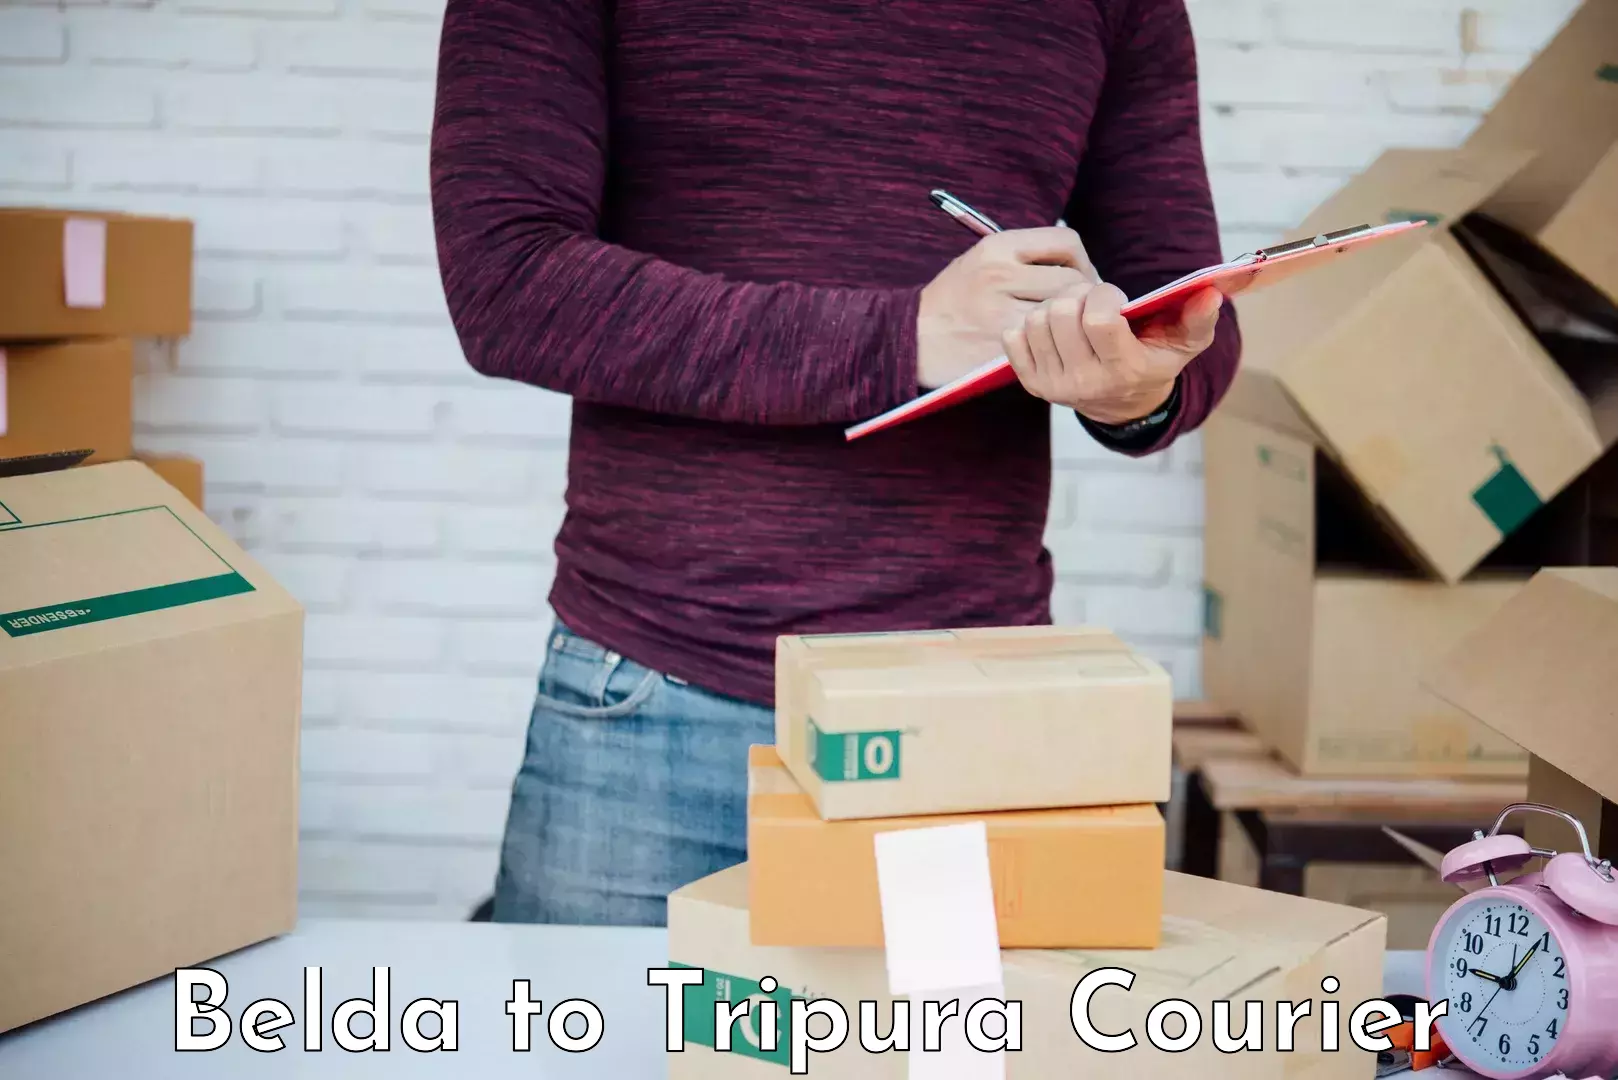 Budget-friendly movers Belda to Tripura